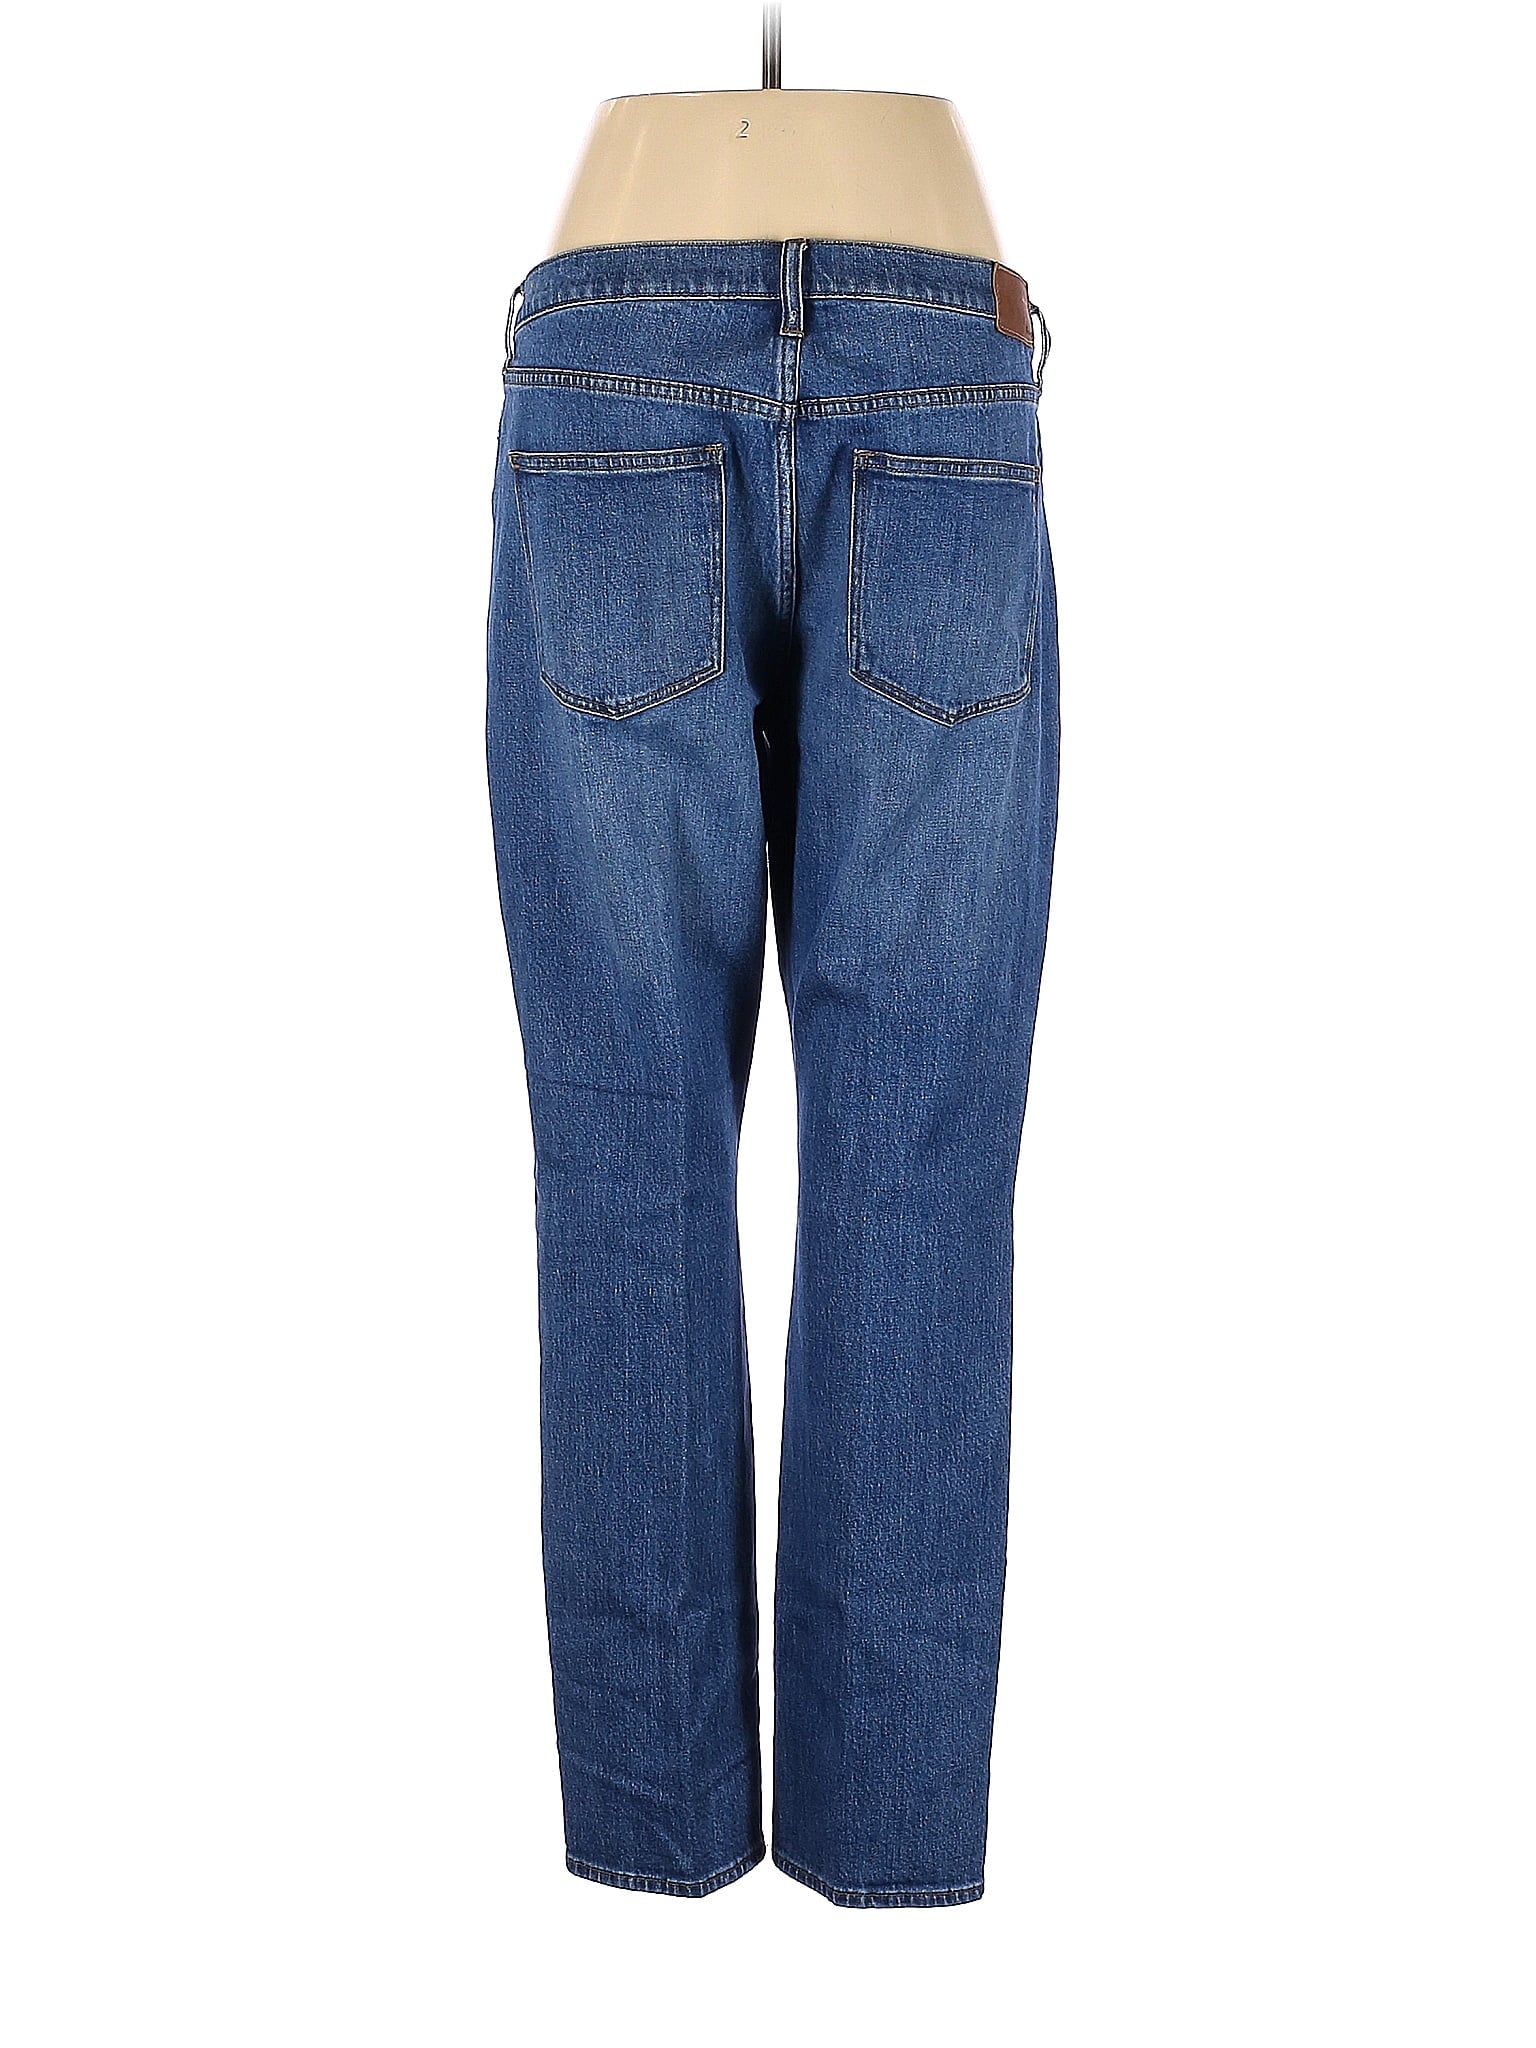 High-Rise Jeans waist size - 32